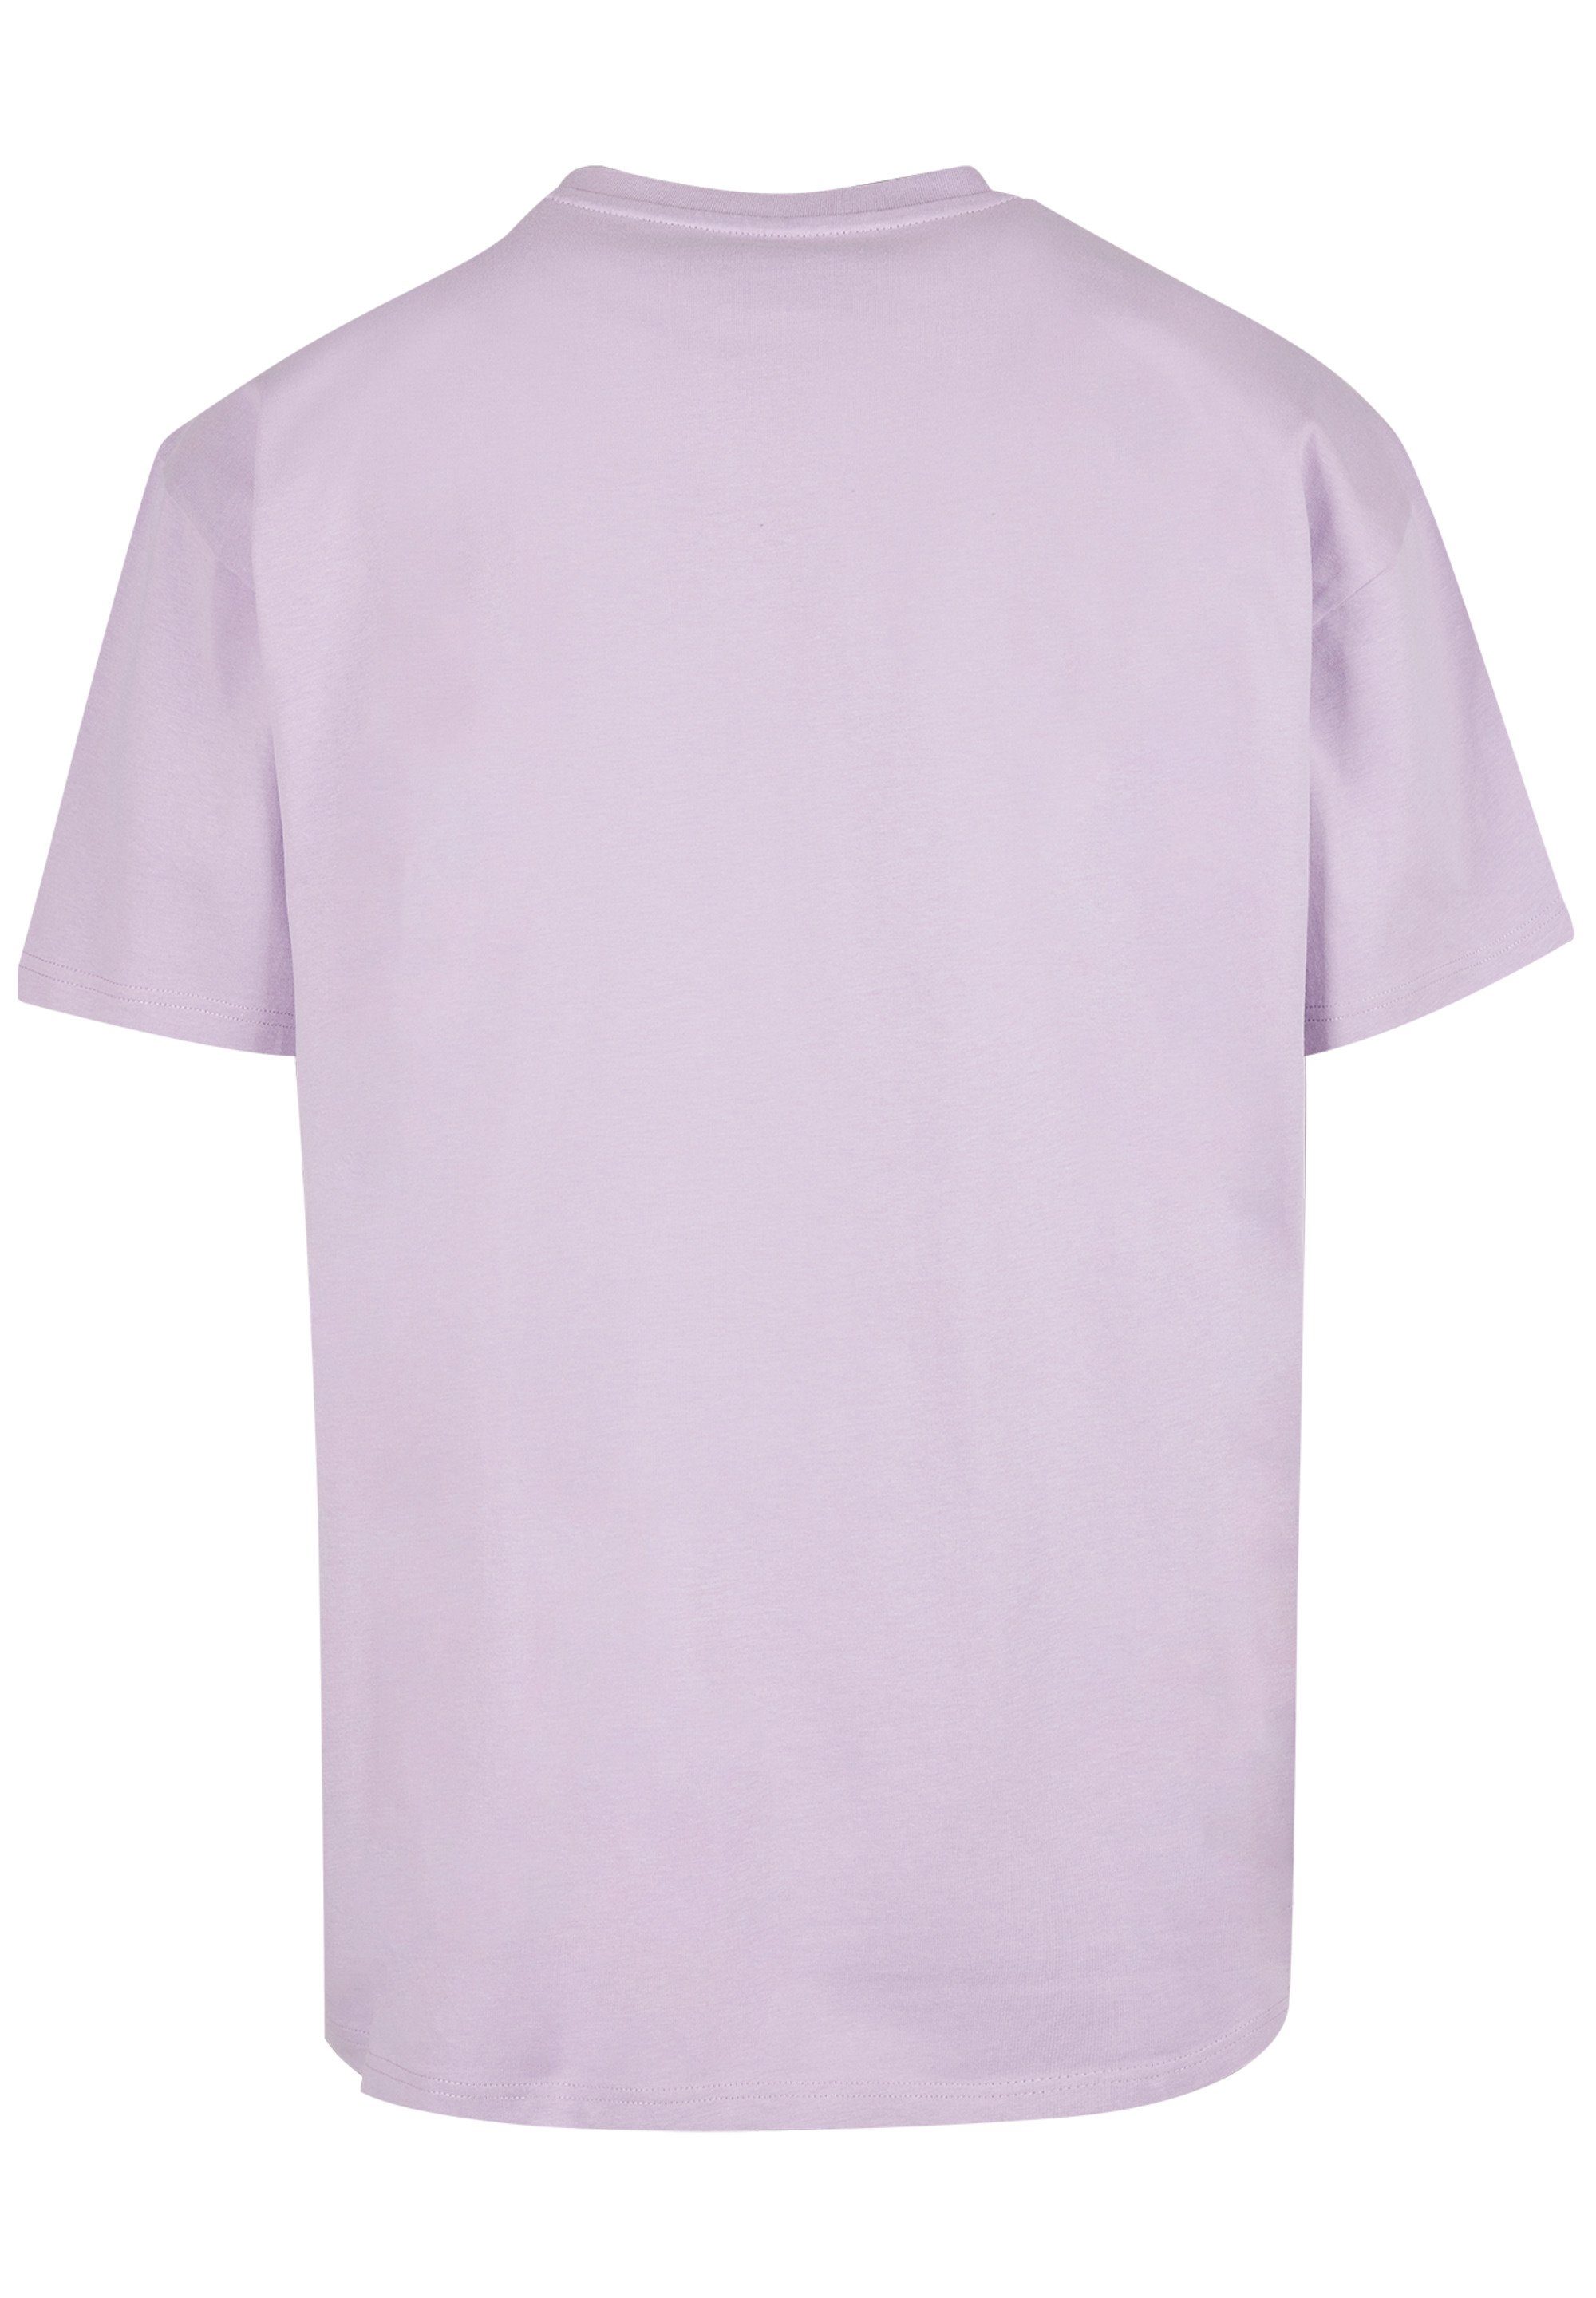 F4NT4STIC lilac Print T-Shirt TEE Skull OVERSIZE Schmetterling